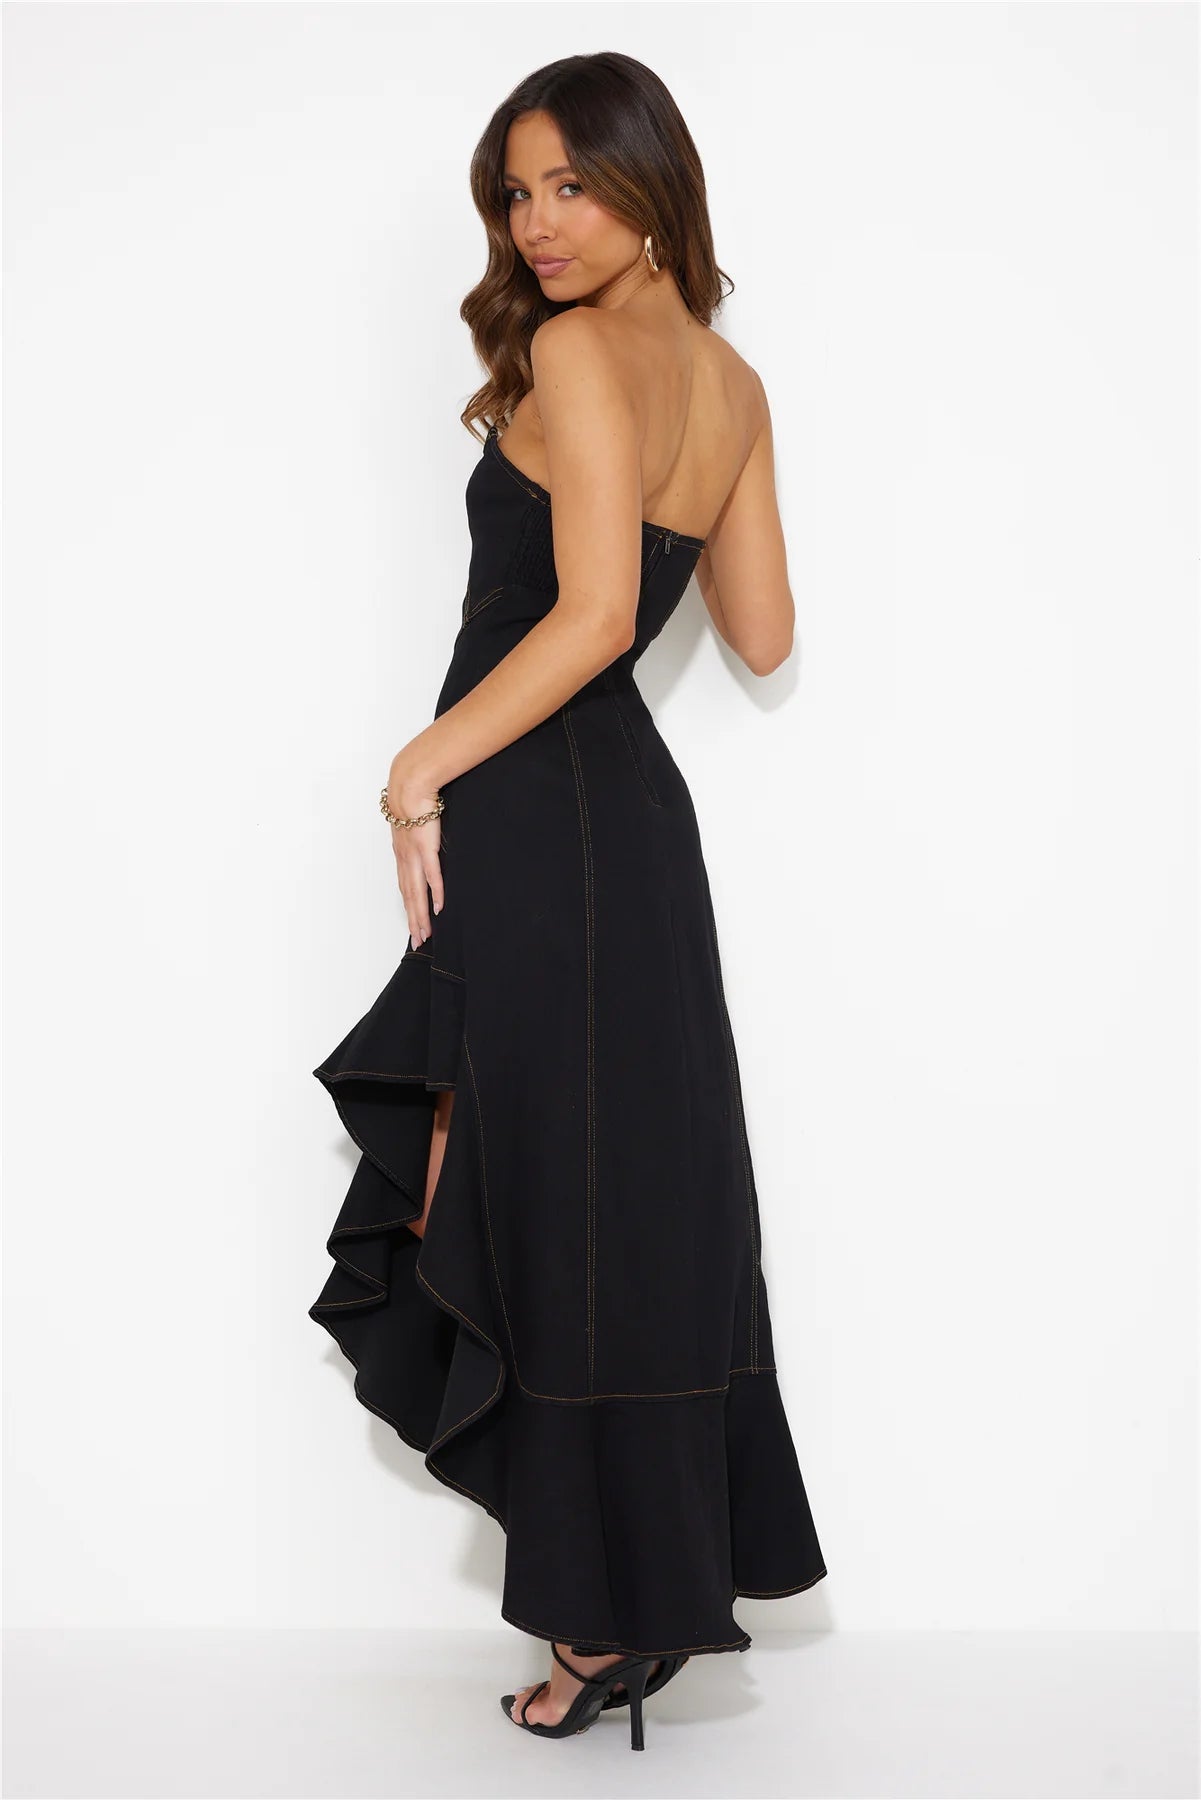 Marant Dress - Black